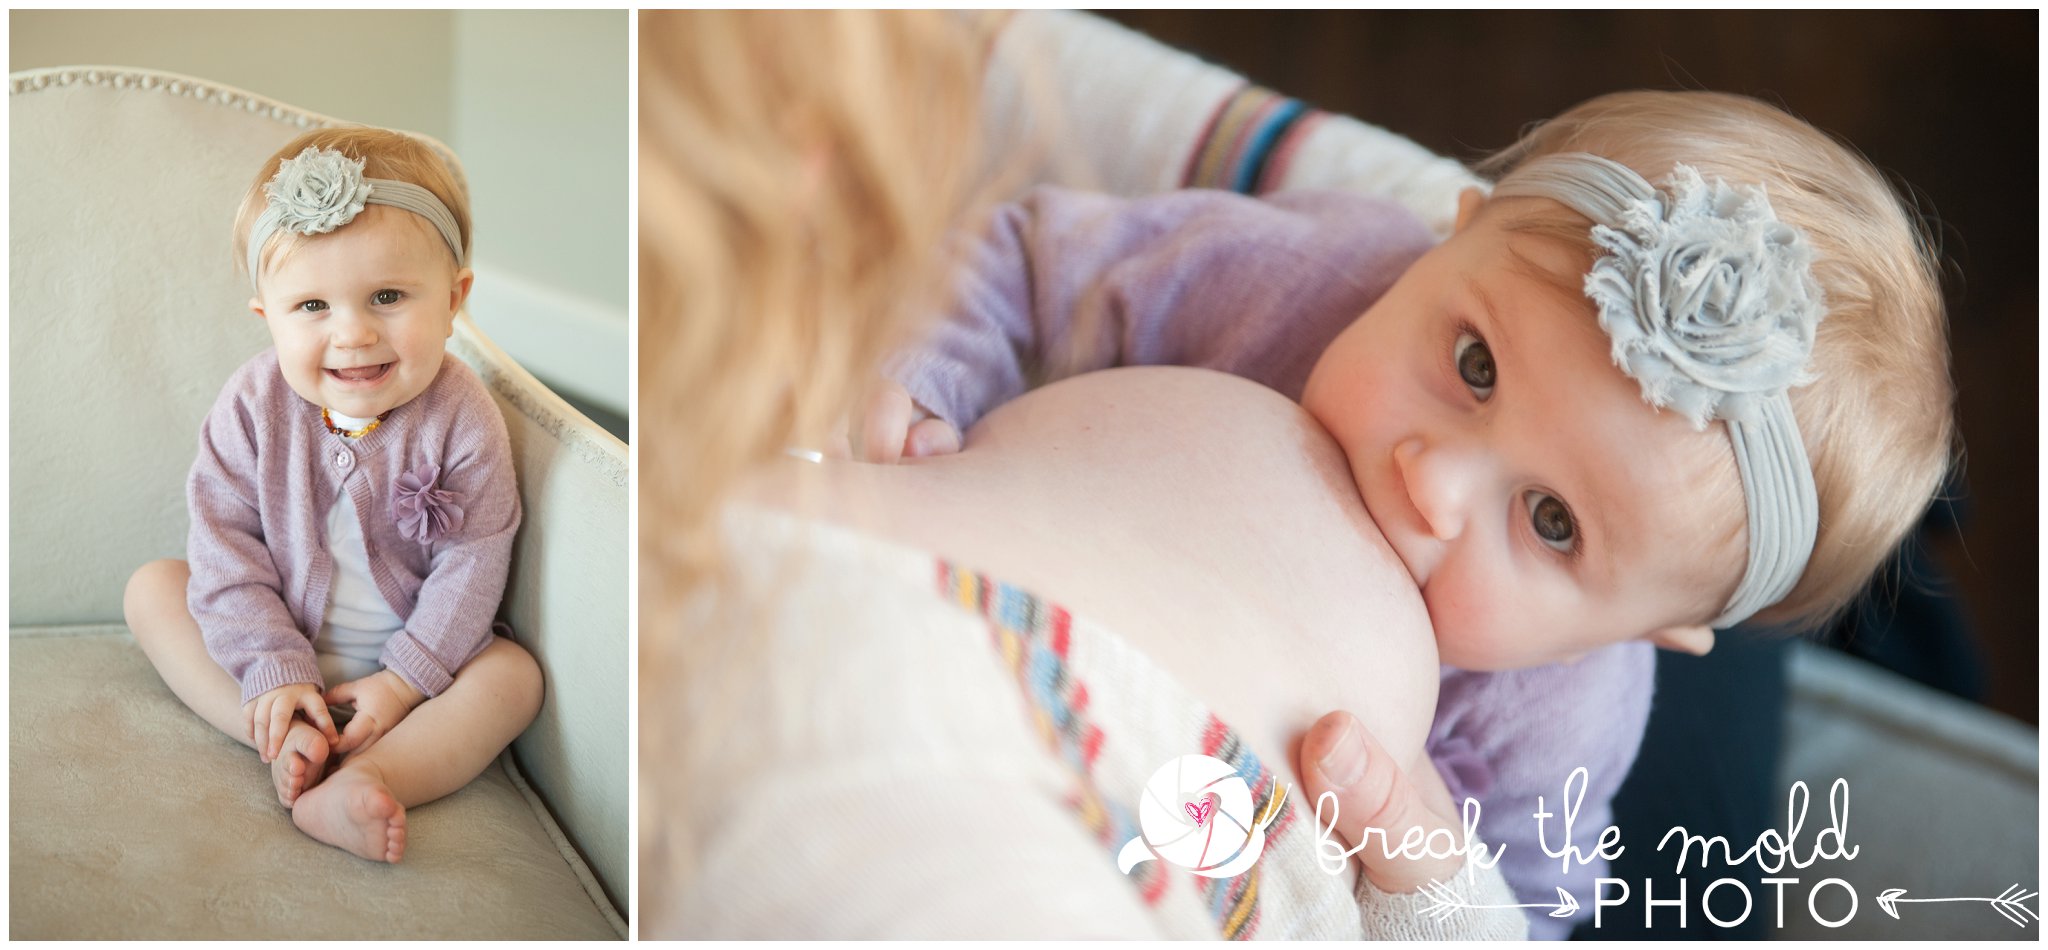 break-the-mold-photo-nursing-body-love-baby-pregnant-women-powerful-breastfeeding-sessions_7262.jpg